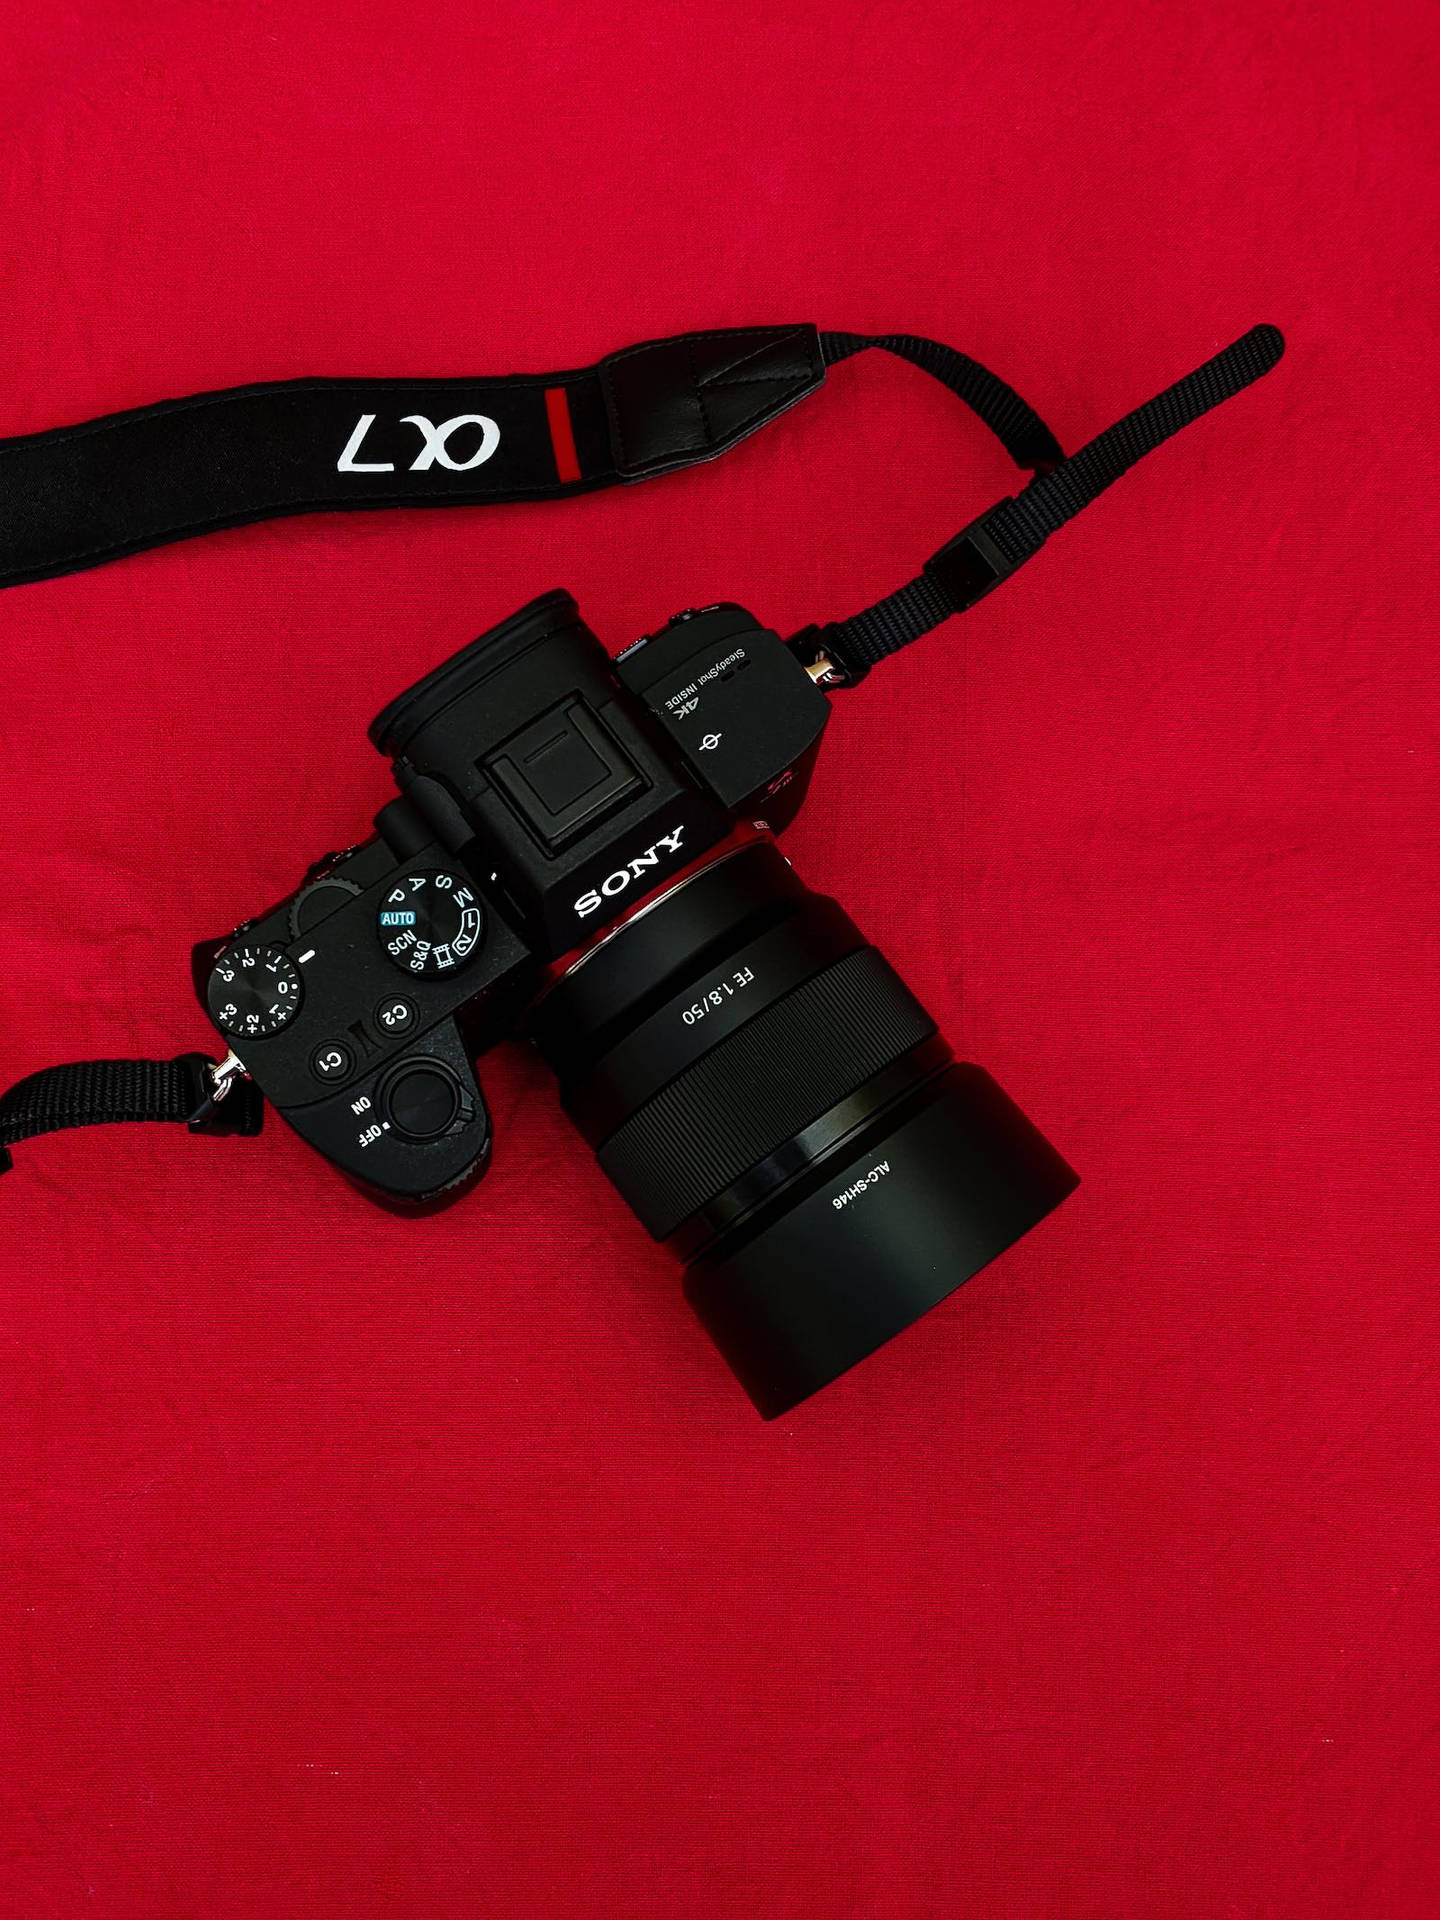 4k Black Camera On Red Surface